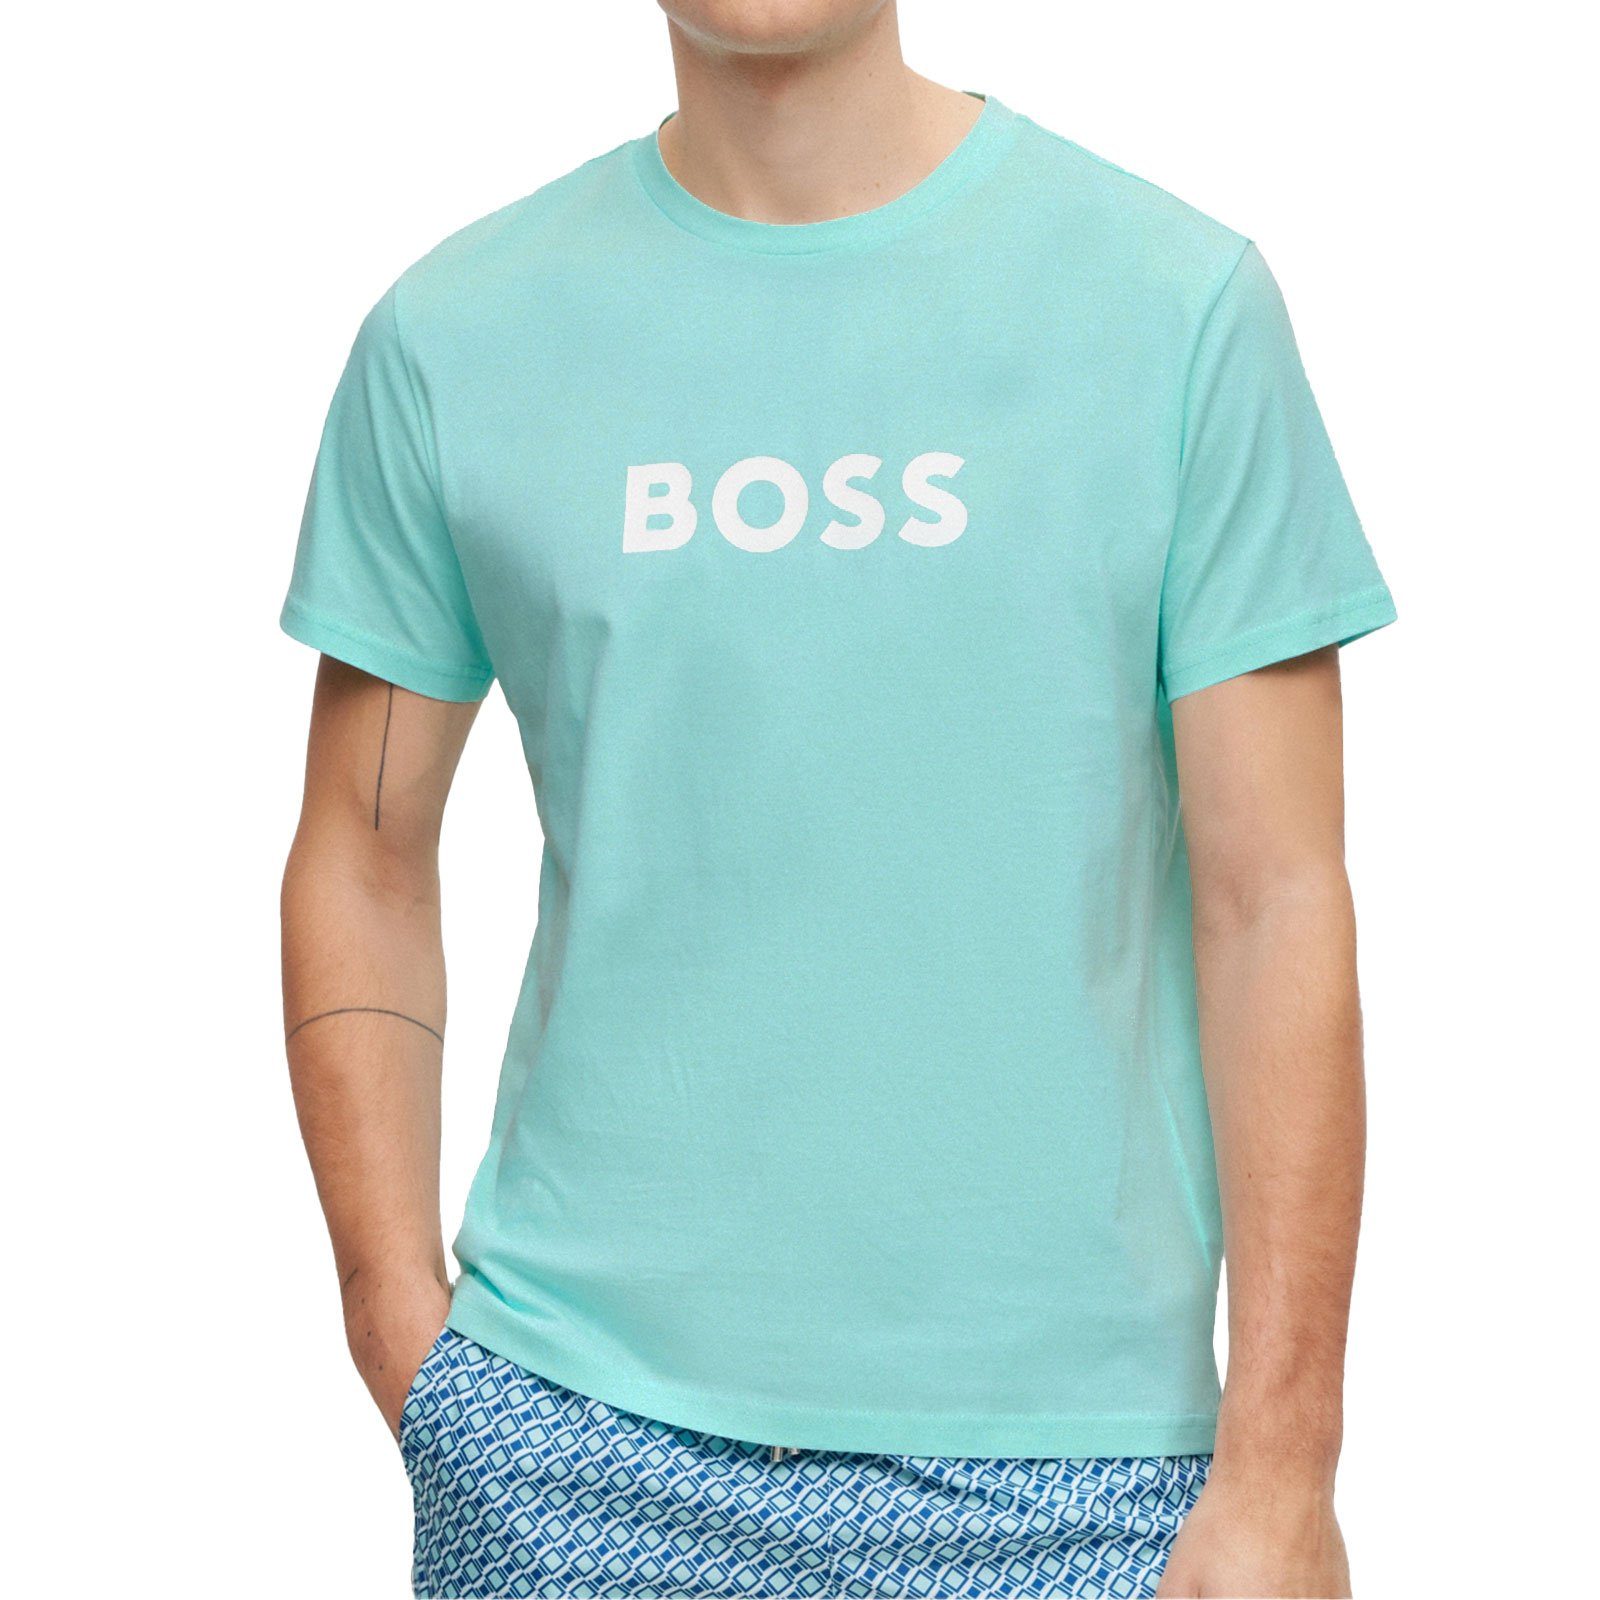 auf Markenprint green BOSS der T-Shirt open 356 mit großem RN Brust T-Shirt